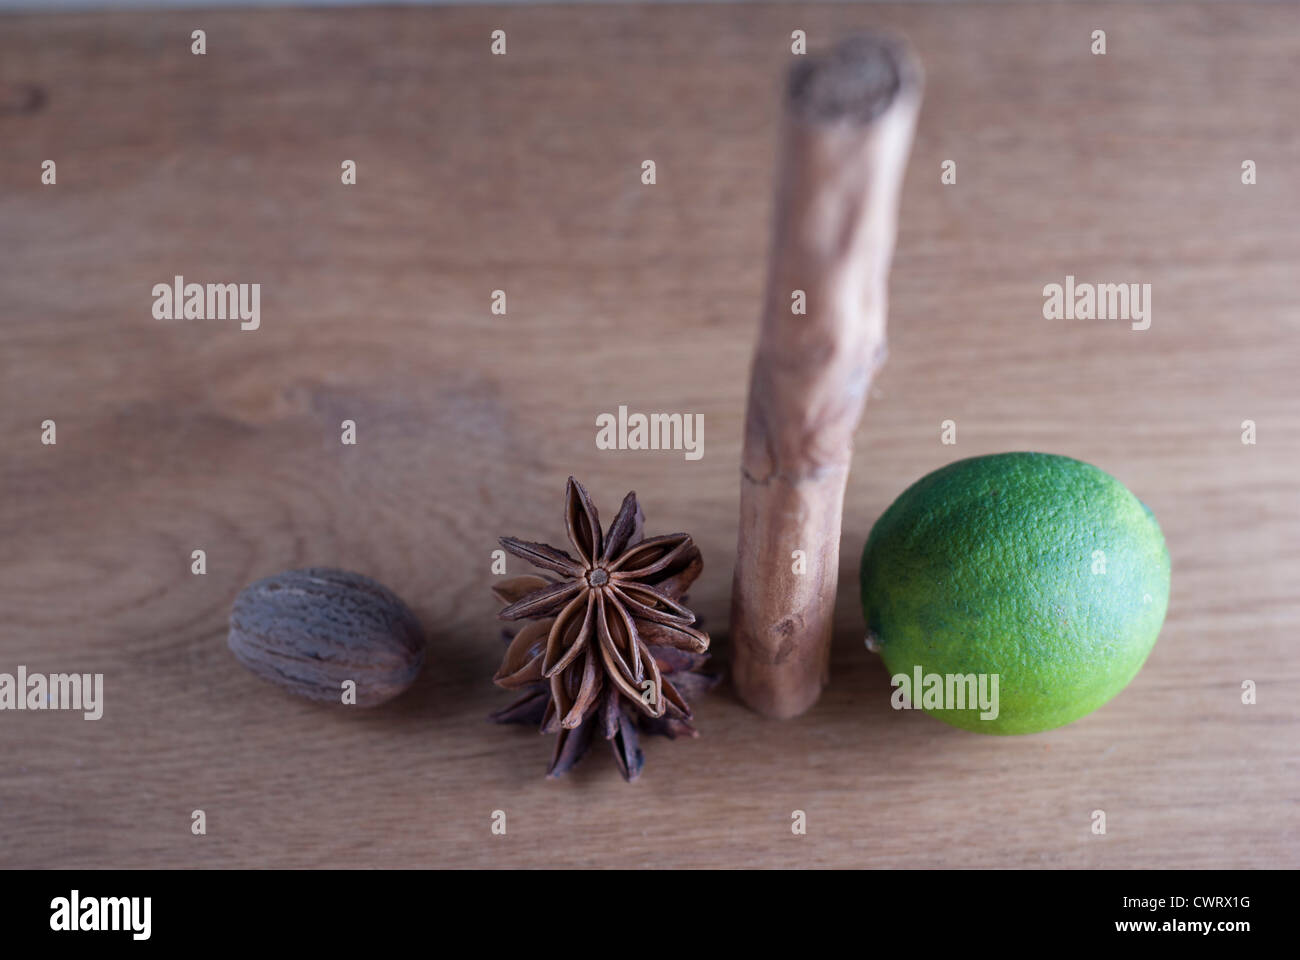 Still life, closeup of lime, cinnamon, star anise, and nutmeg on a wood surface. Stock Photo